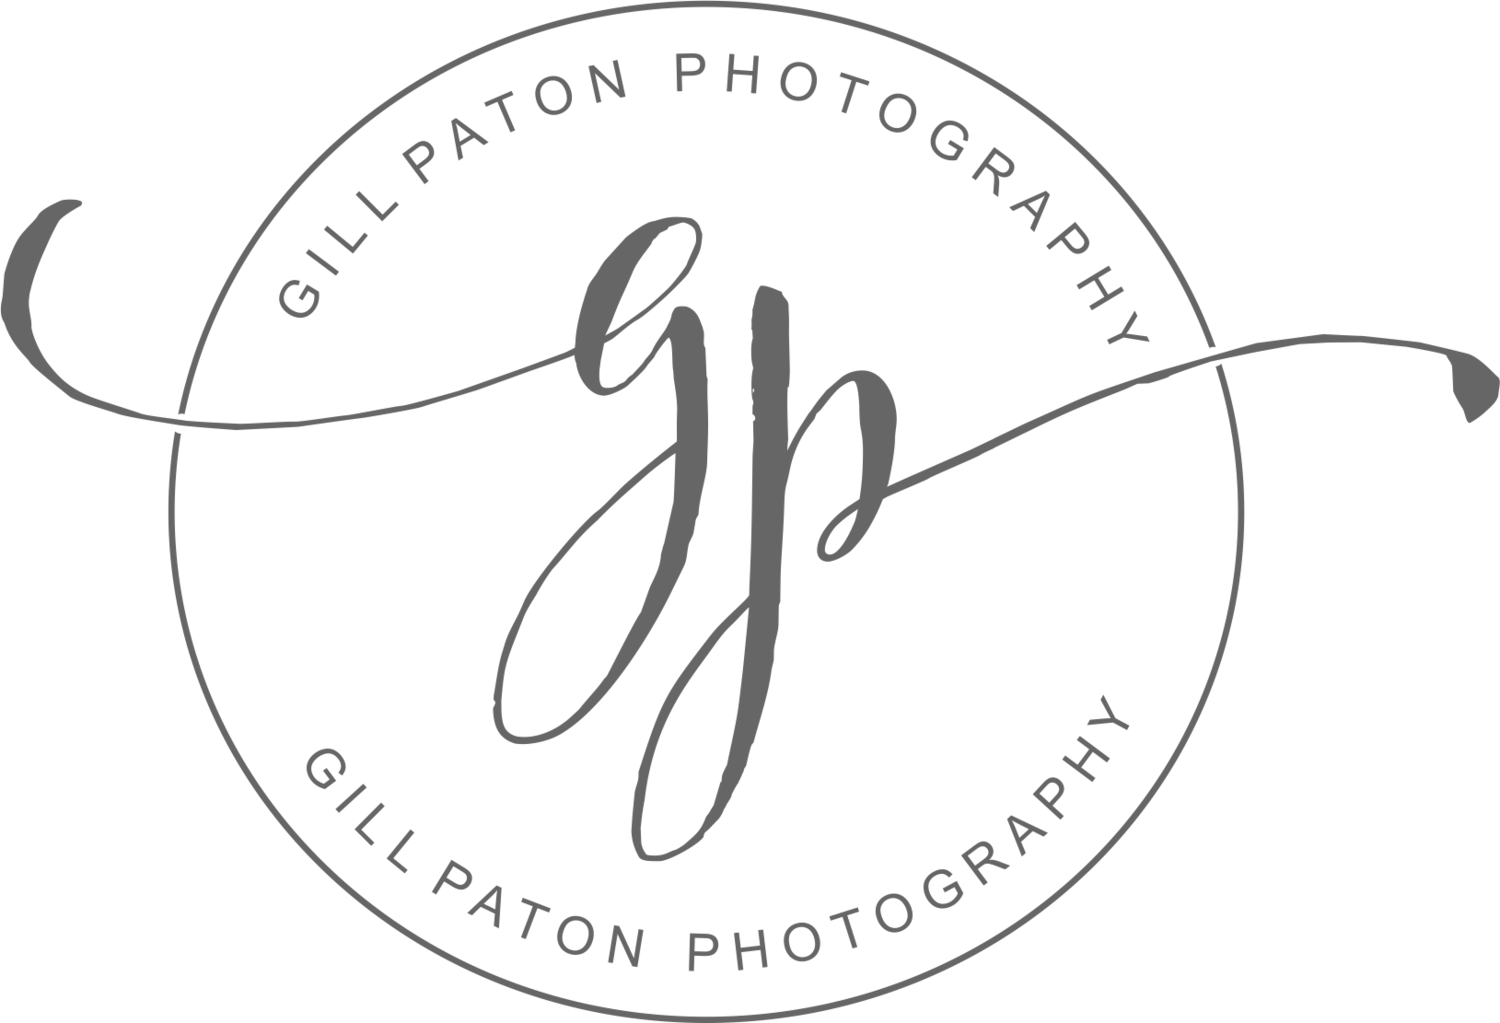 Gill Paton Photography